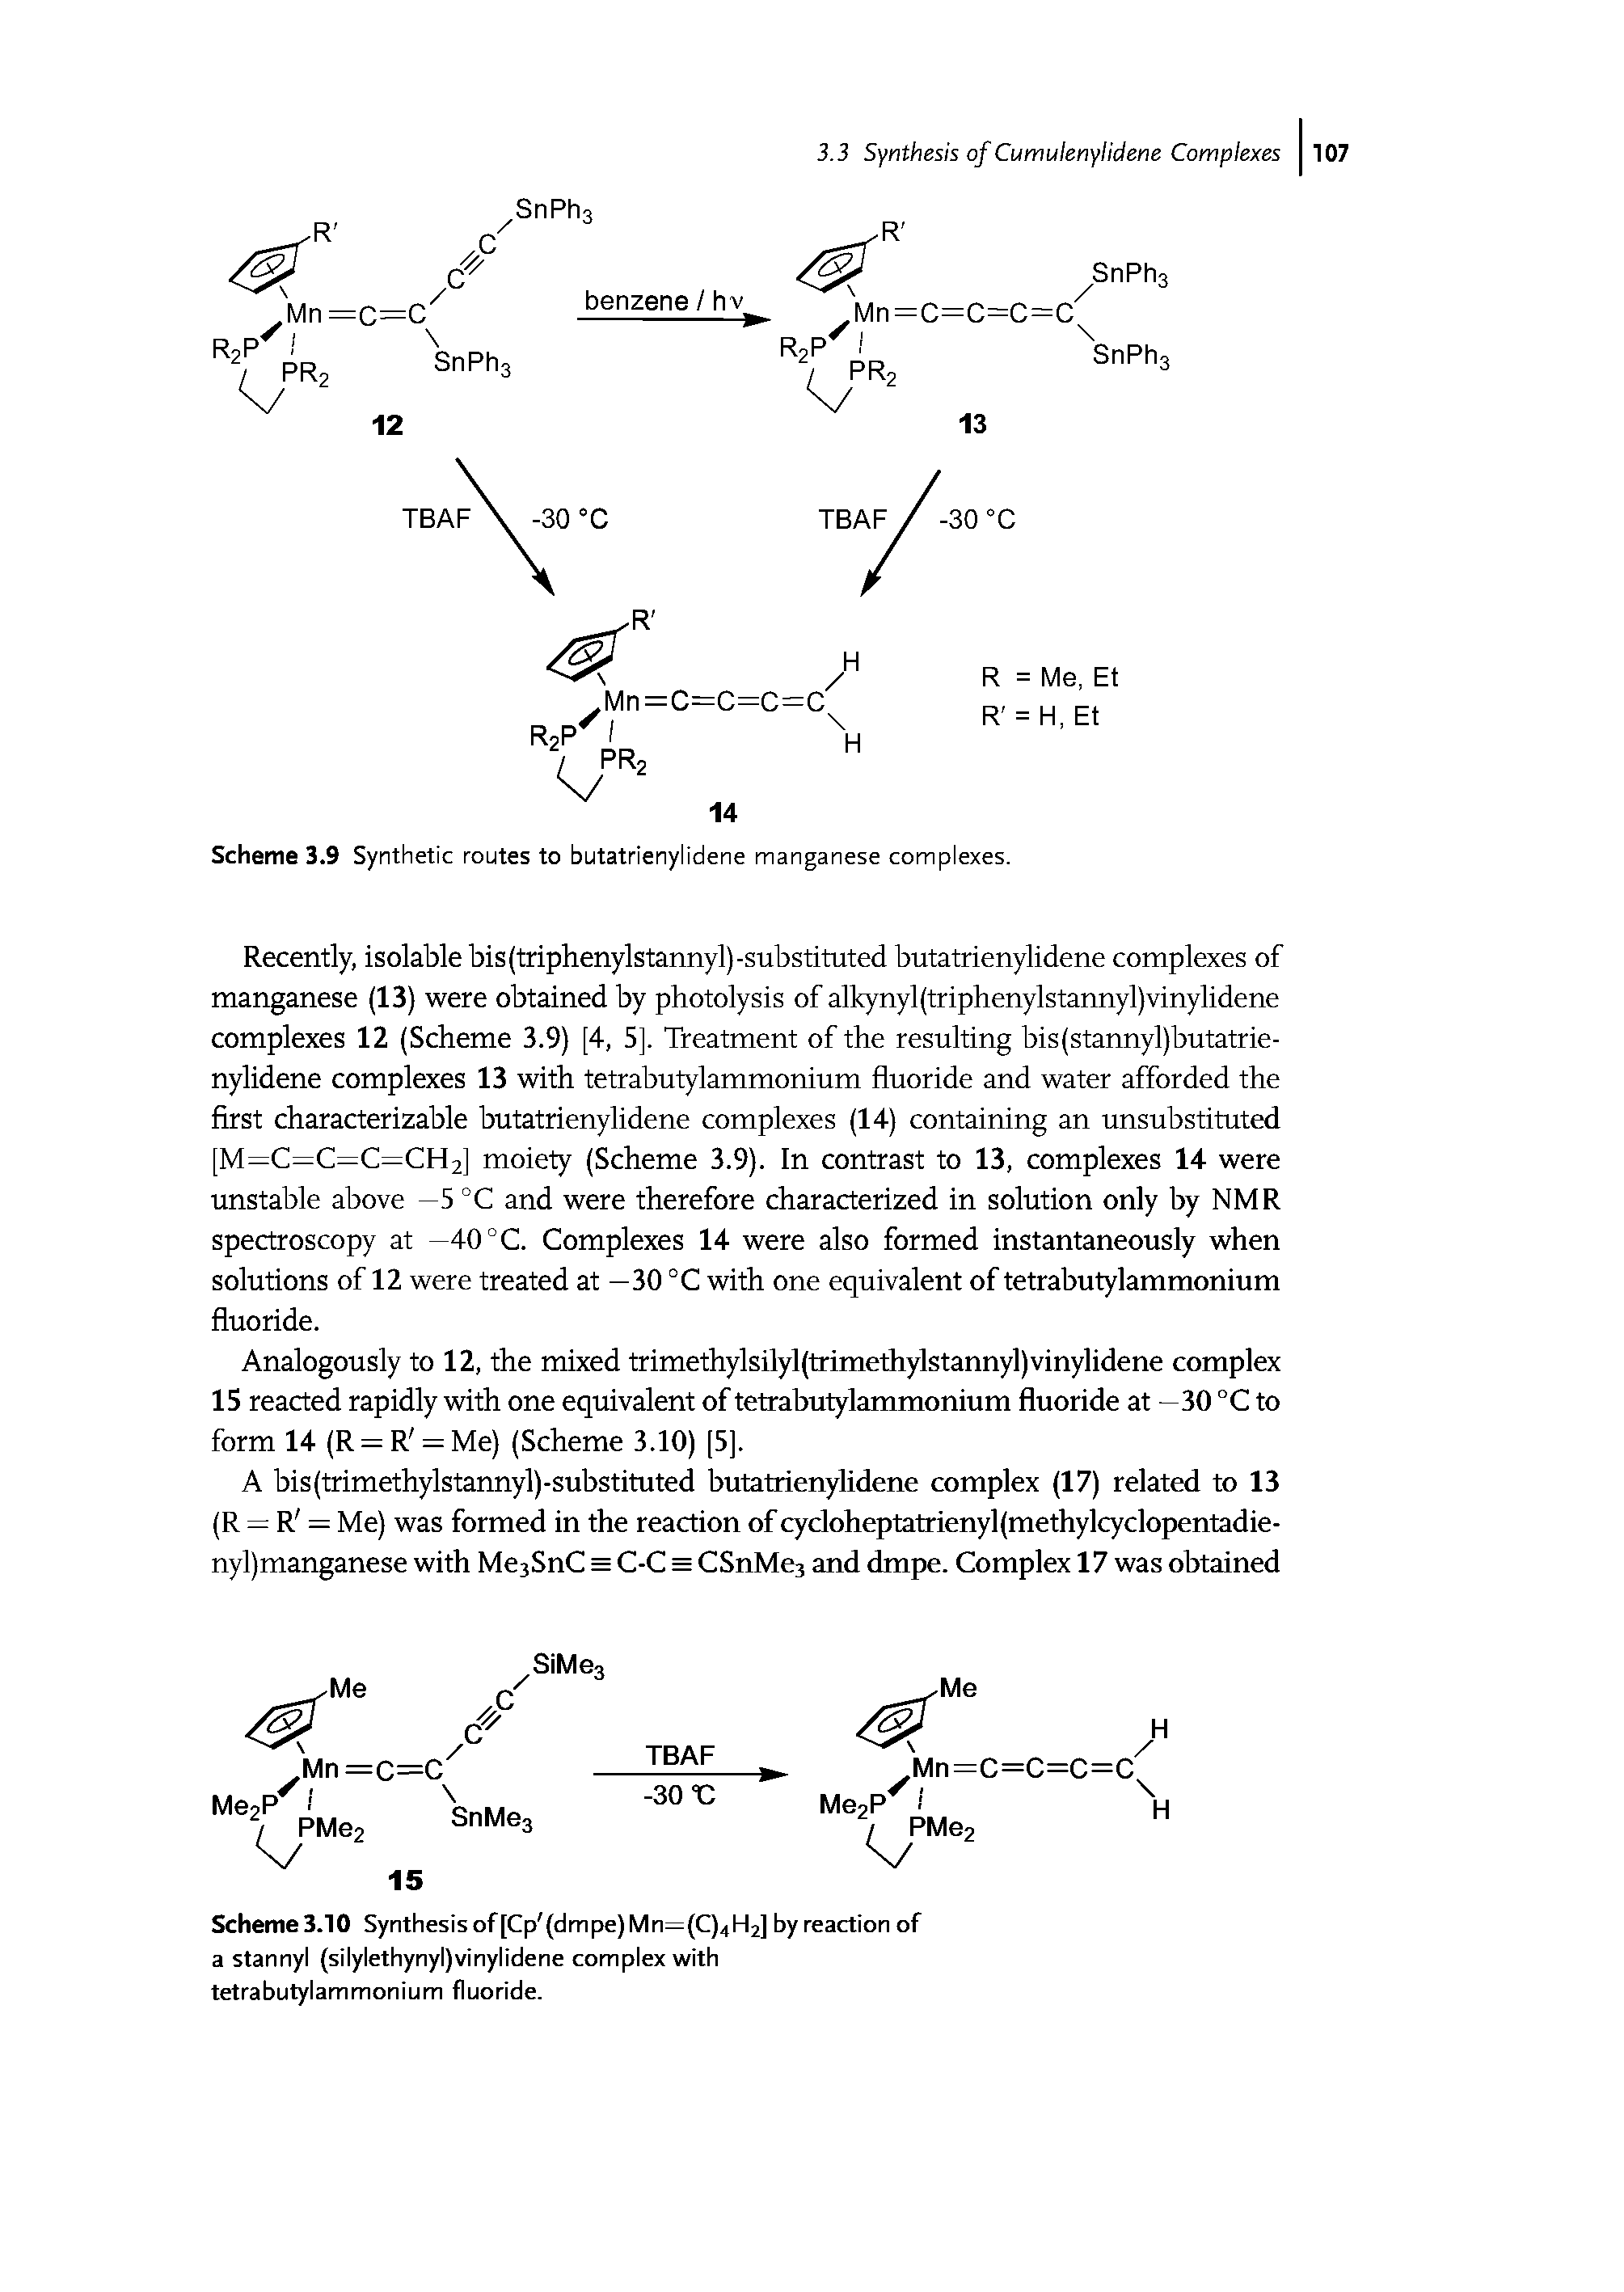 Scheme 3.10 Synthesis of [Cp (dmpe) Mn=(C)4H2] by reaction of a stannyl (silylethynyl)vinylidene complex with tetrabutylammonium fluoride.